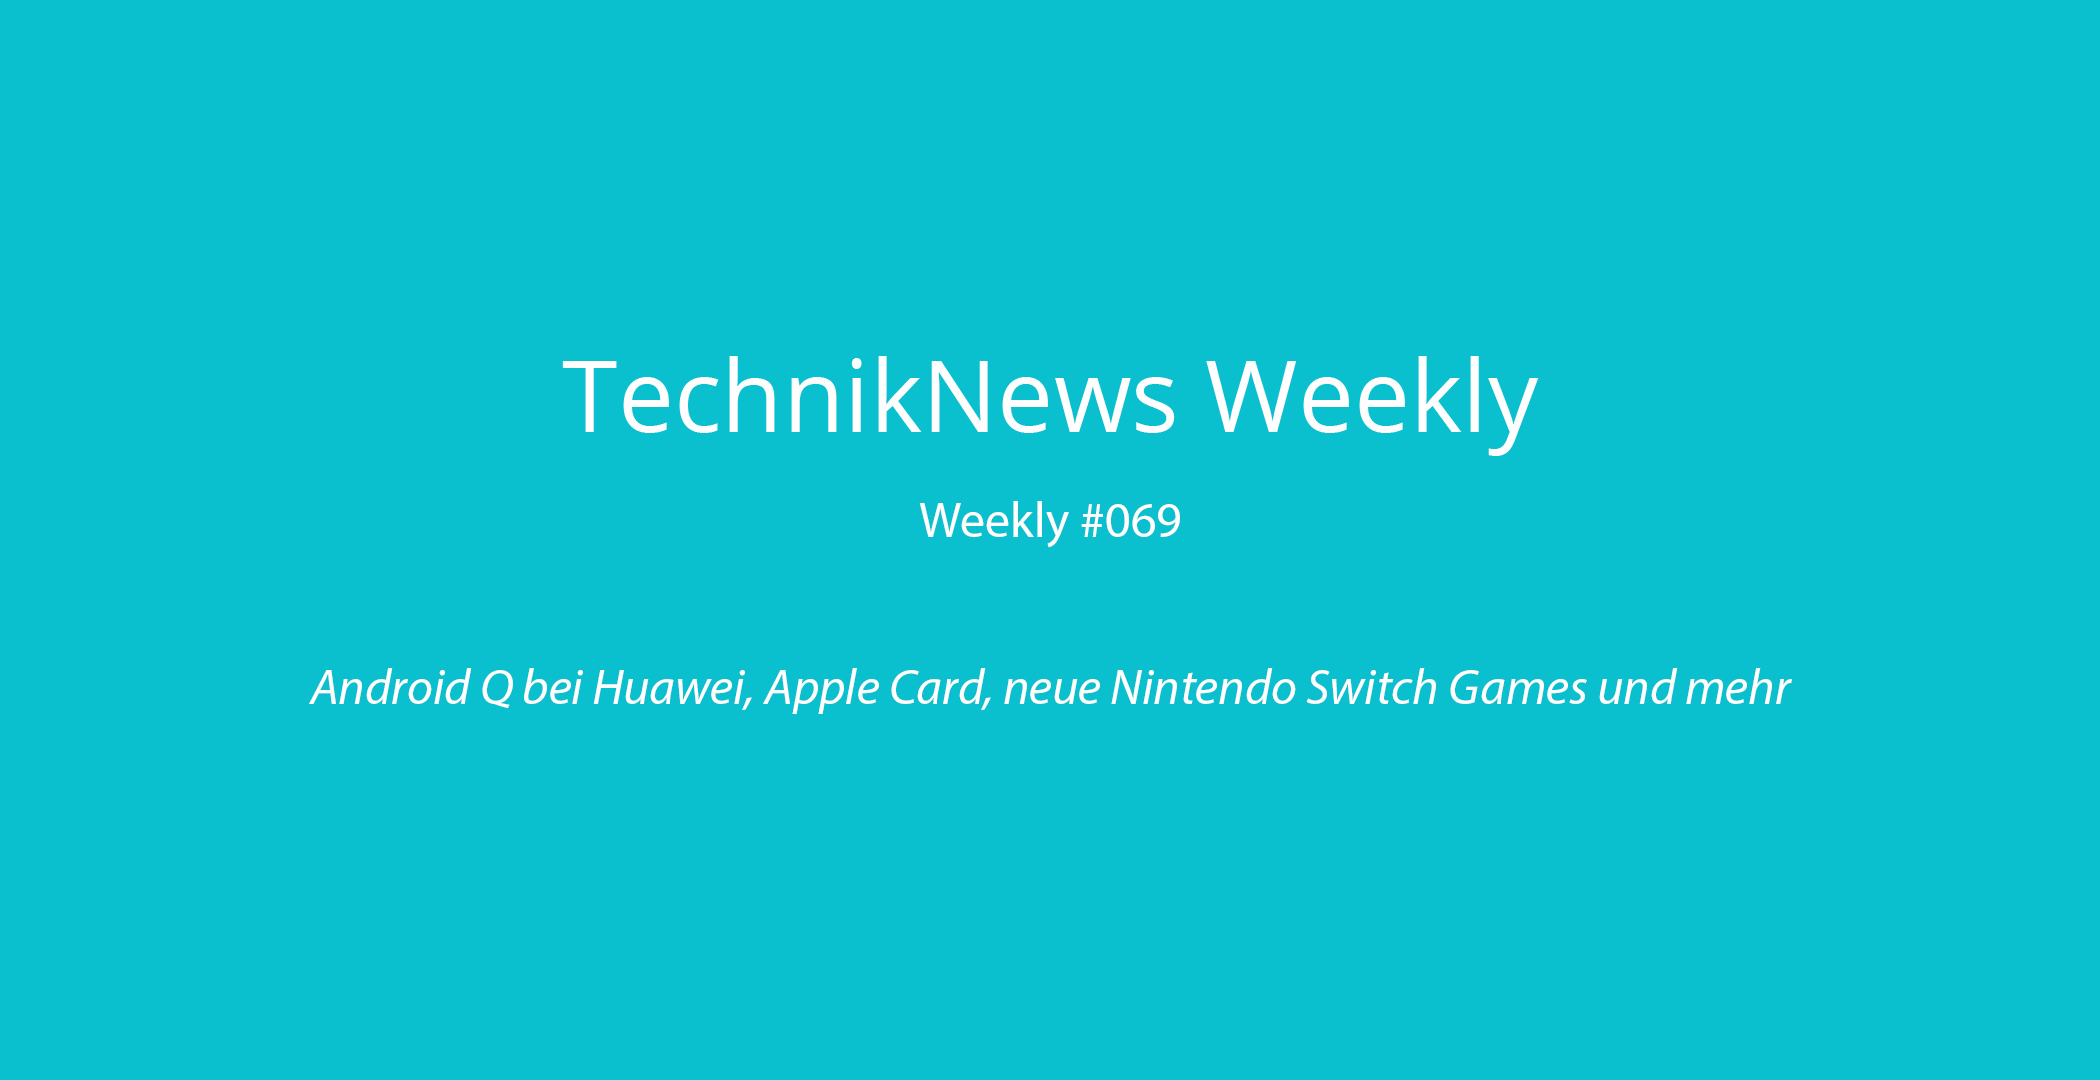 TechnikNews Weekly #069